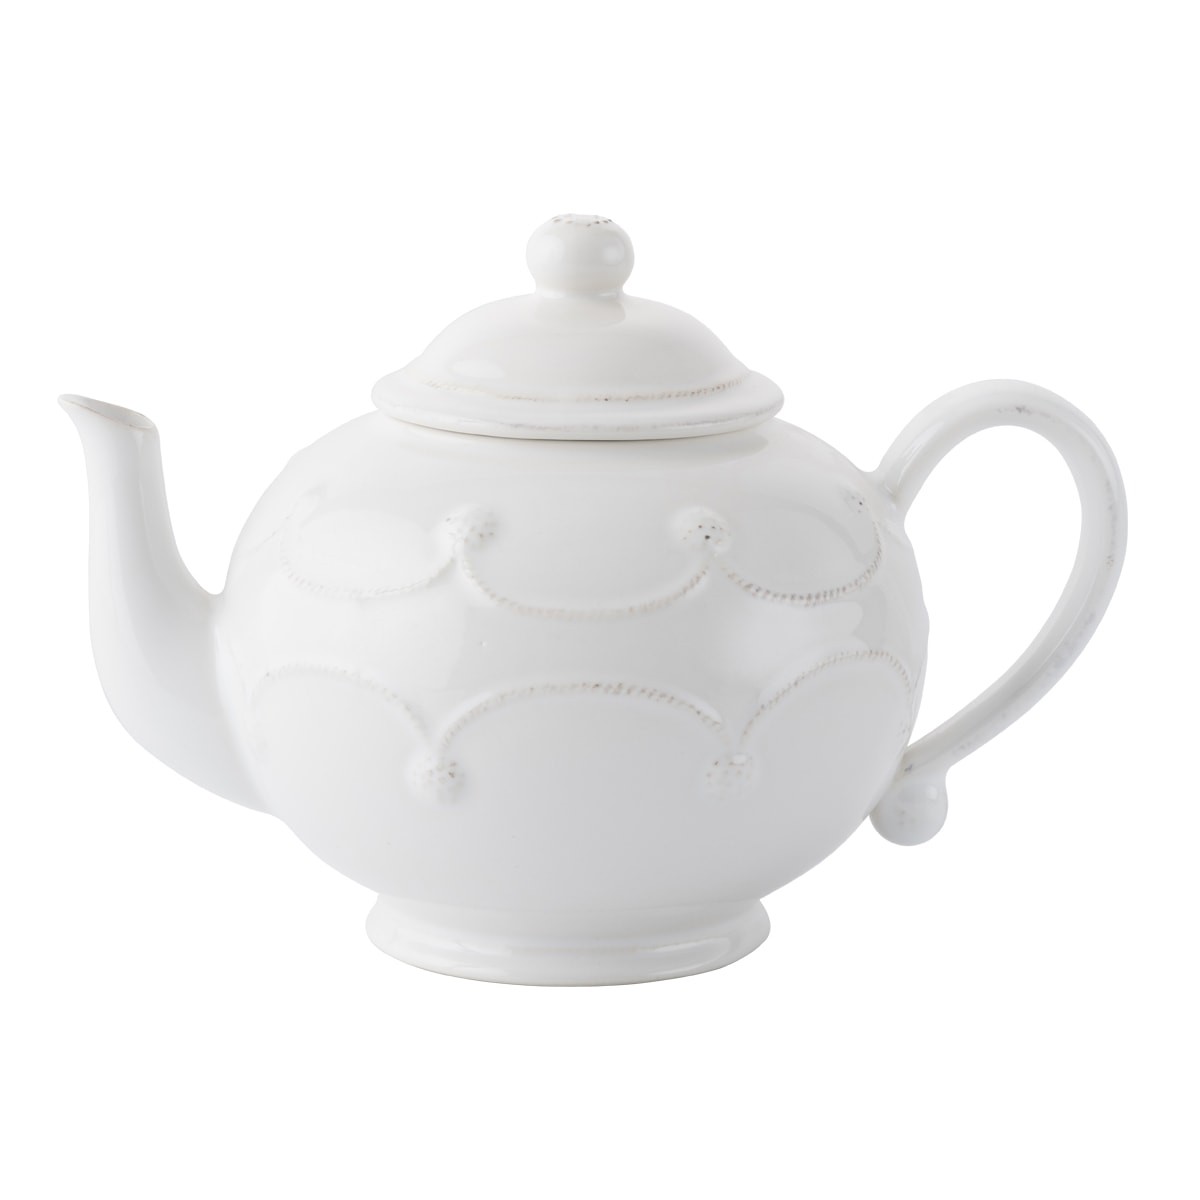 white Juliska Berry & thread teapot at GDC Home furniture and decor